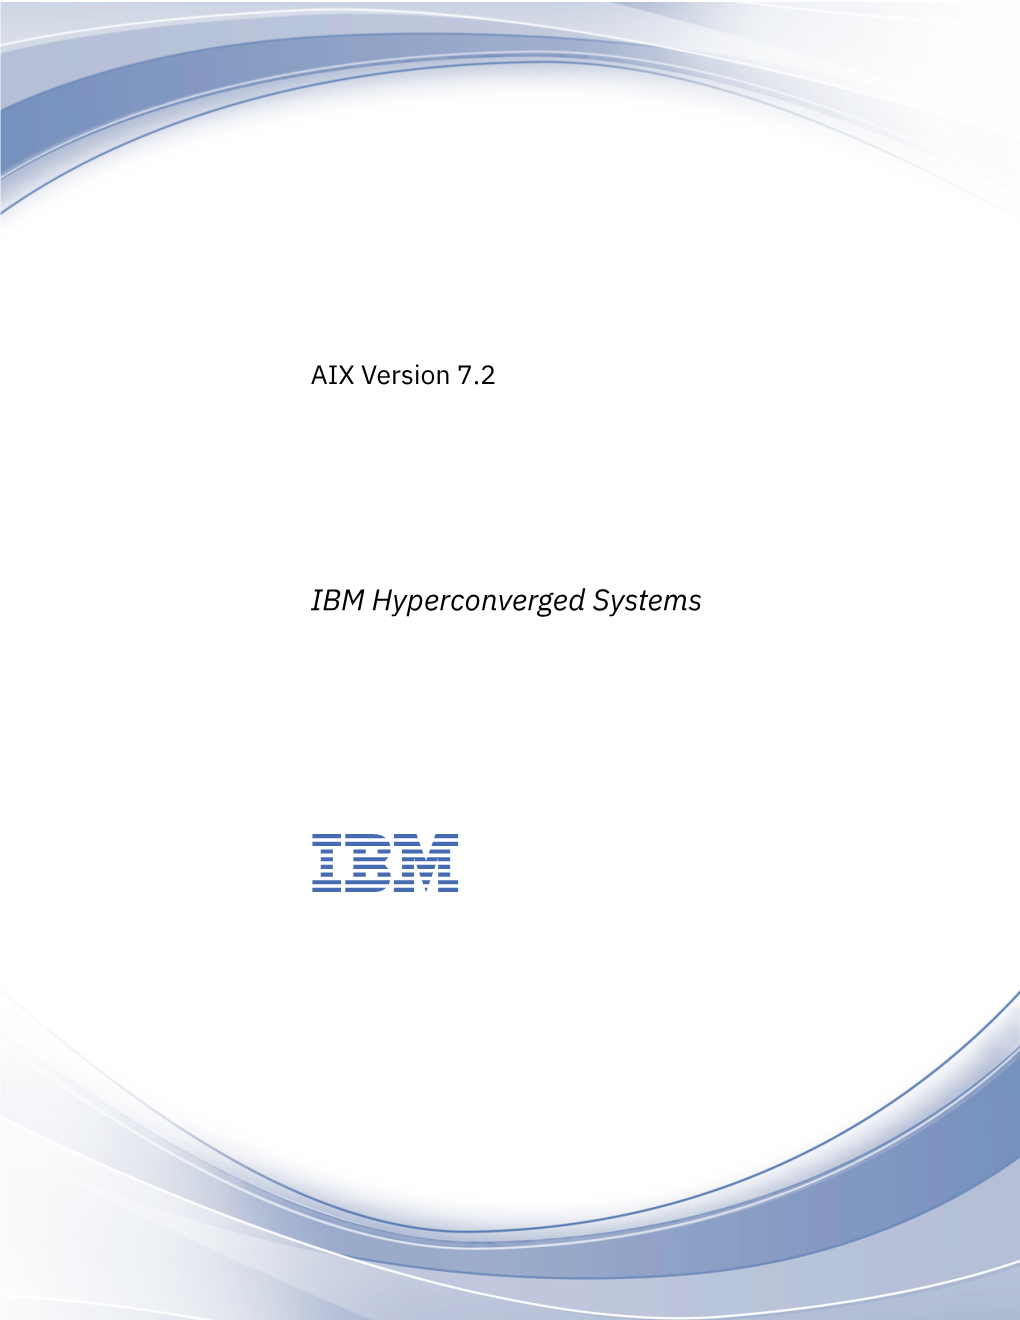 AIX Version 7.2: IBM Hyperconverged Systems IBM Hyperconverged Systems